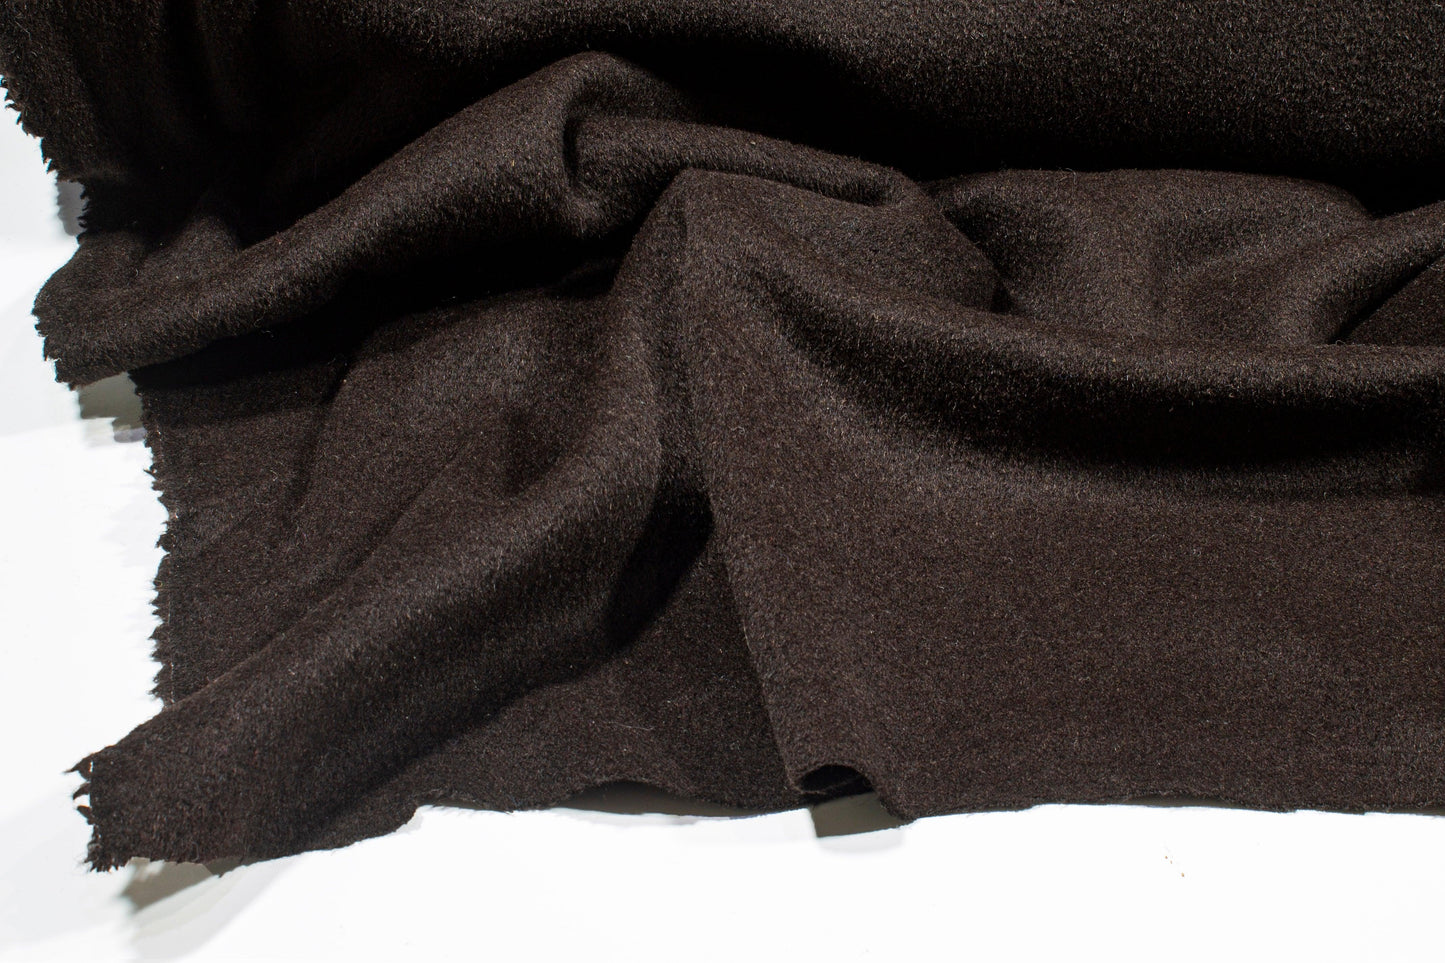 Dark Brown Italian Wool Coating - Prime Fabrics